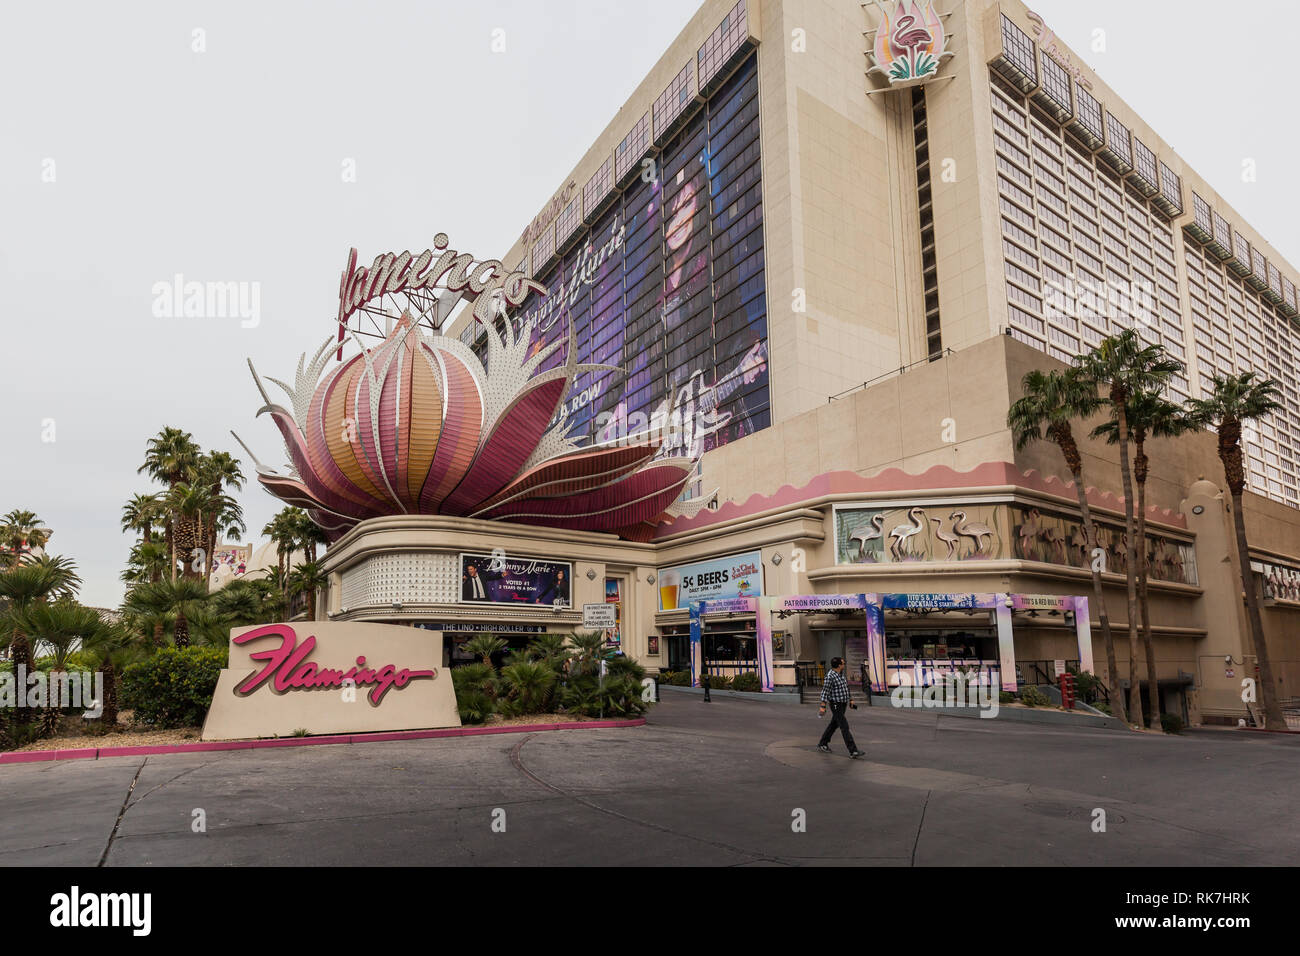 Eingang des Flamingo Las Vegas, das Flamingo ist ein Hotel und Casino auf dem Las Vegas Strip im Paradies, Nevada. Stockfoto